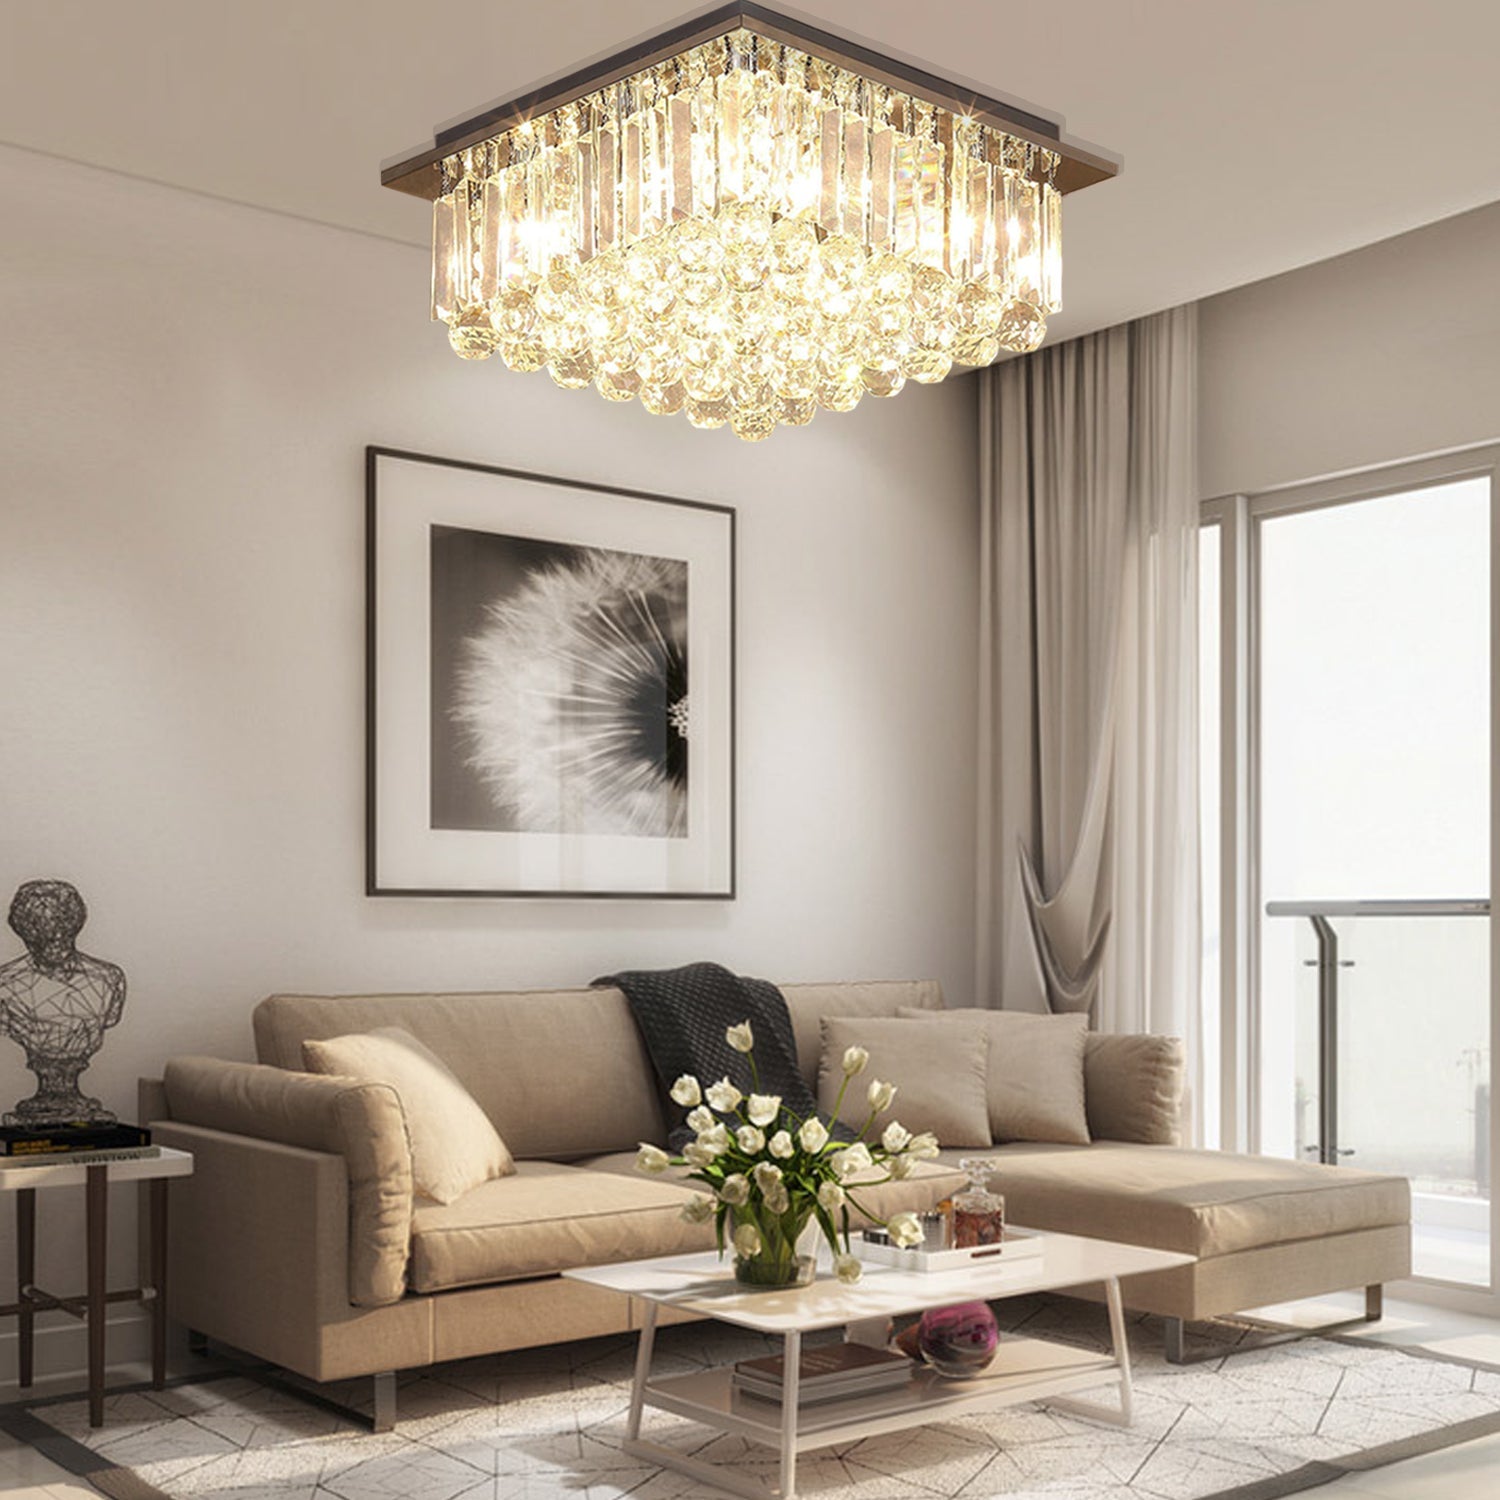 Square Rain Drop Crystal Ceiling Light - Contemporary Lighting Fixture - Living Room